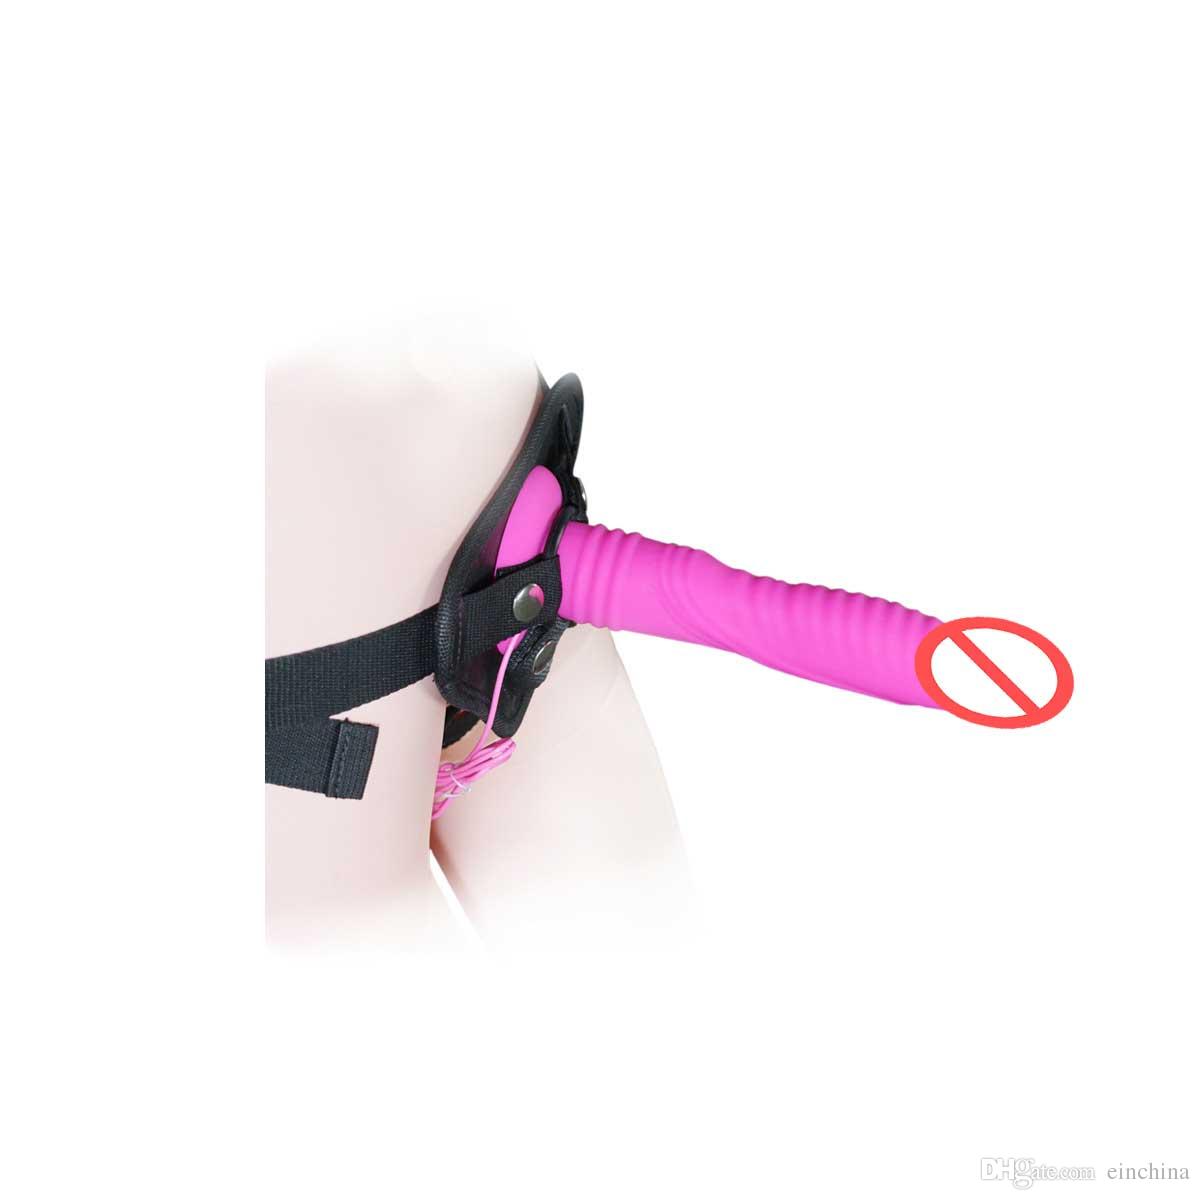 Buy strap on dildo online